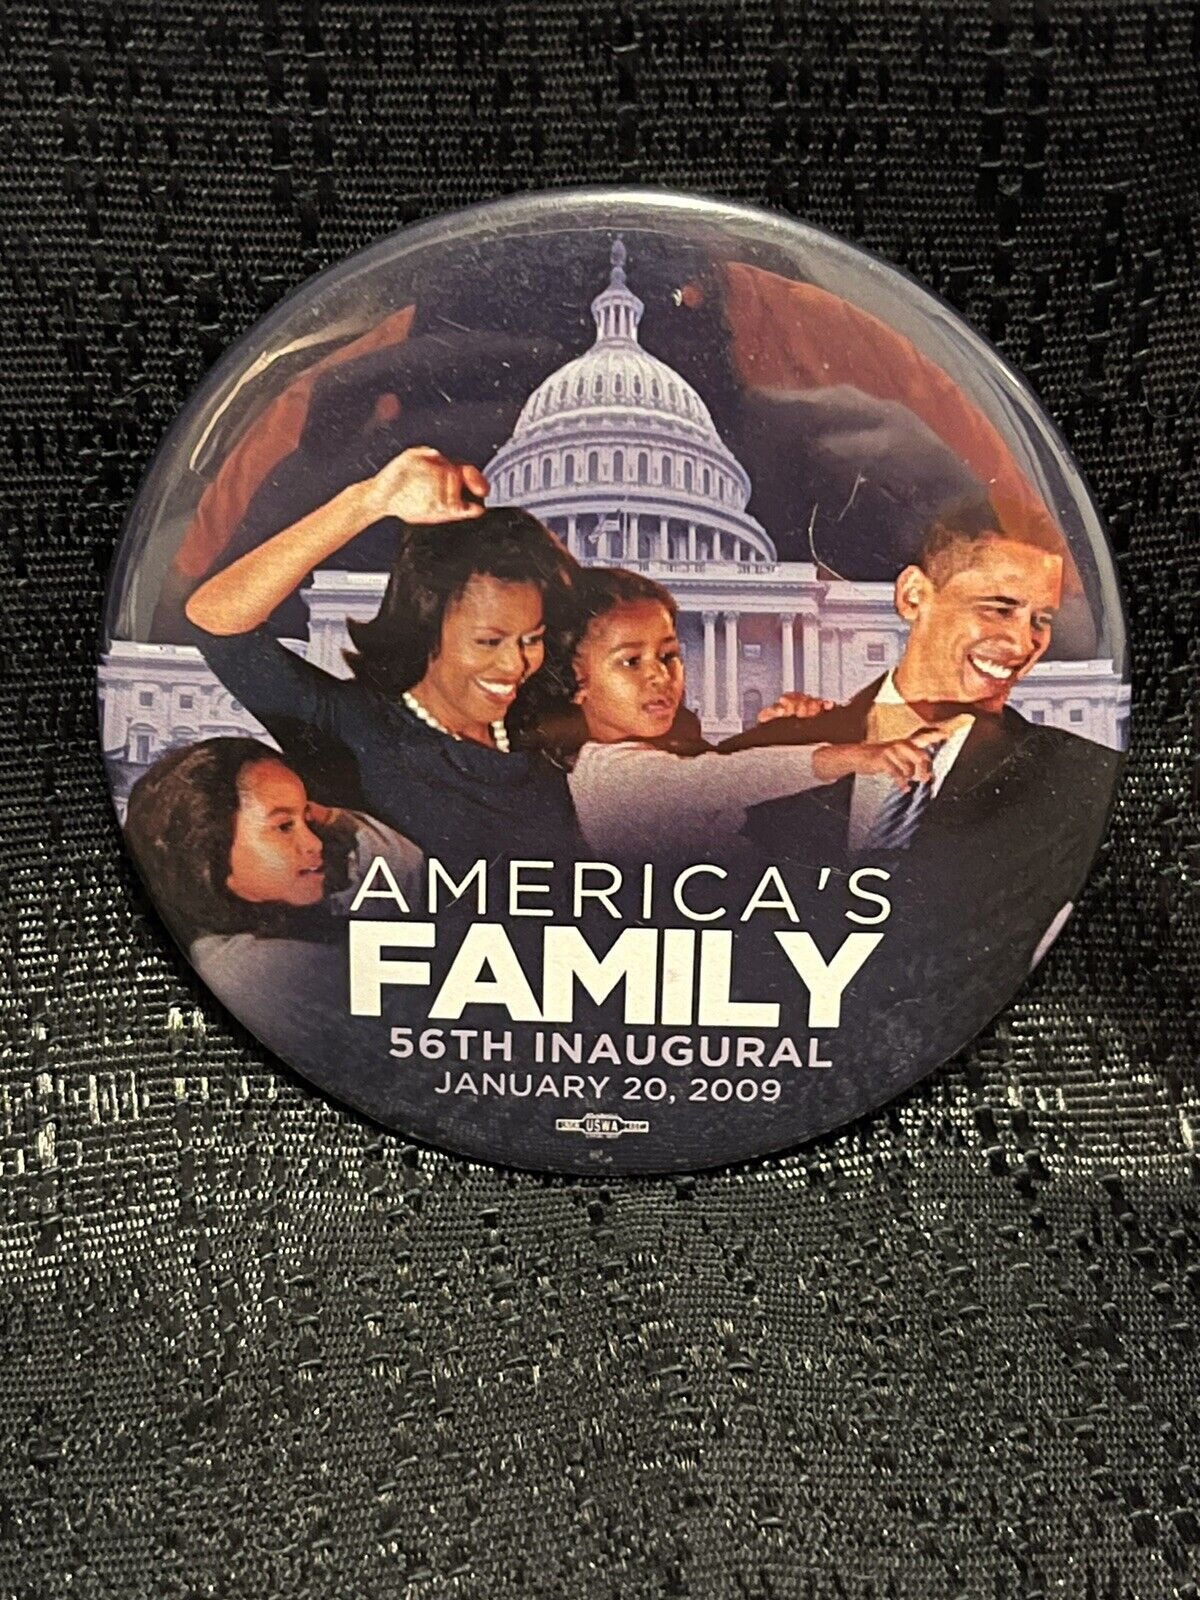 America’s Family 56th Inaugural Souvenir Pinback 